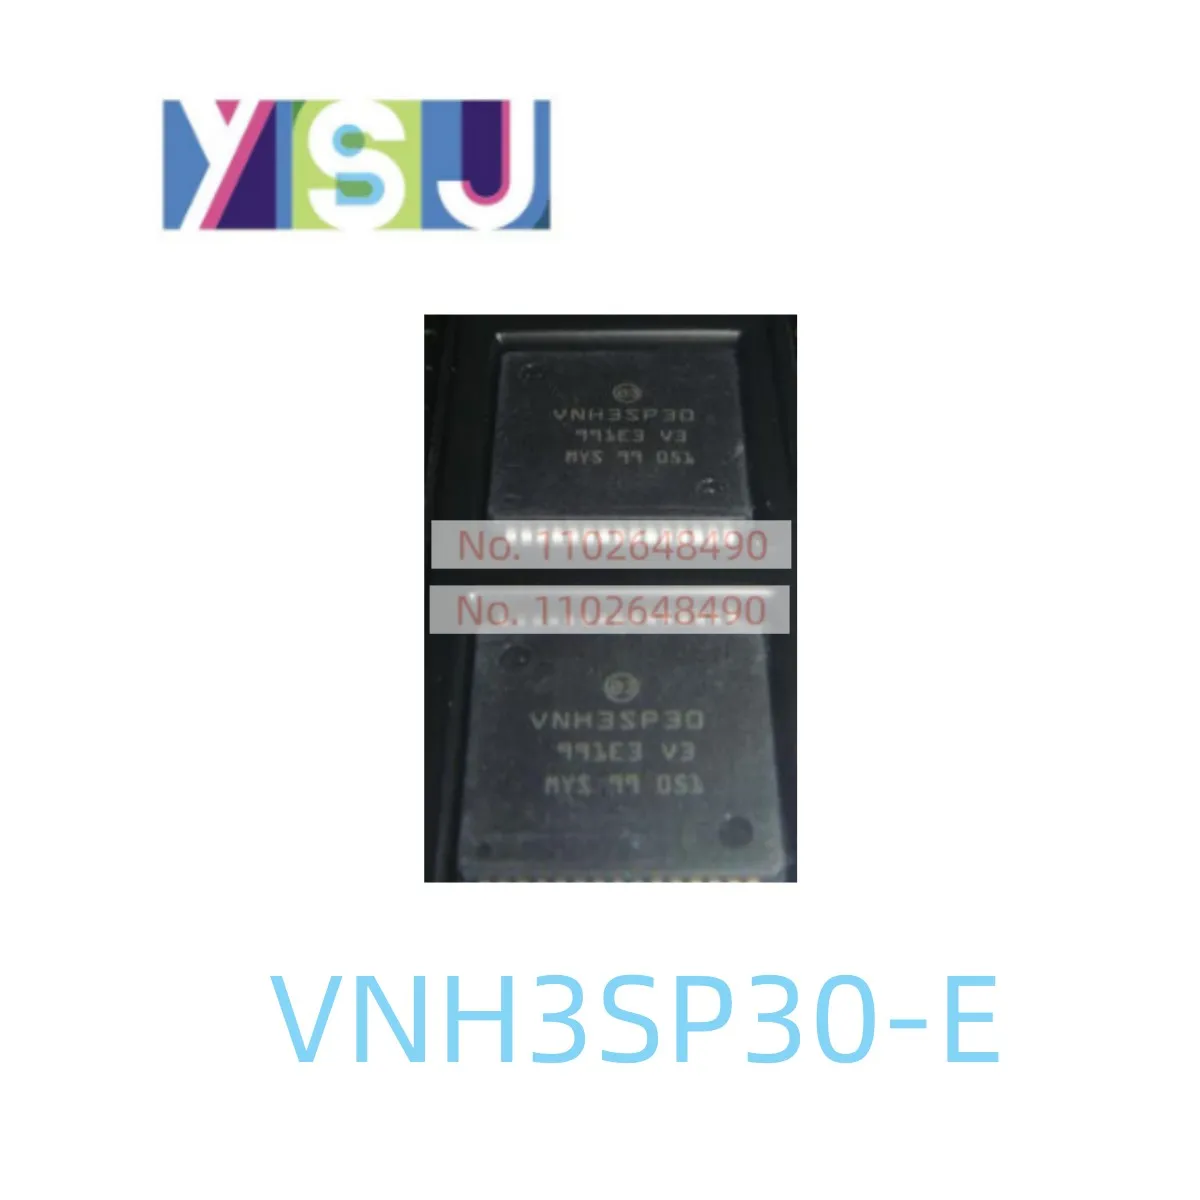 

VNH3SP30-E IC Brand New Current motor drive EncapsulationHSOP-30